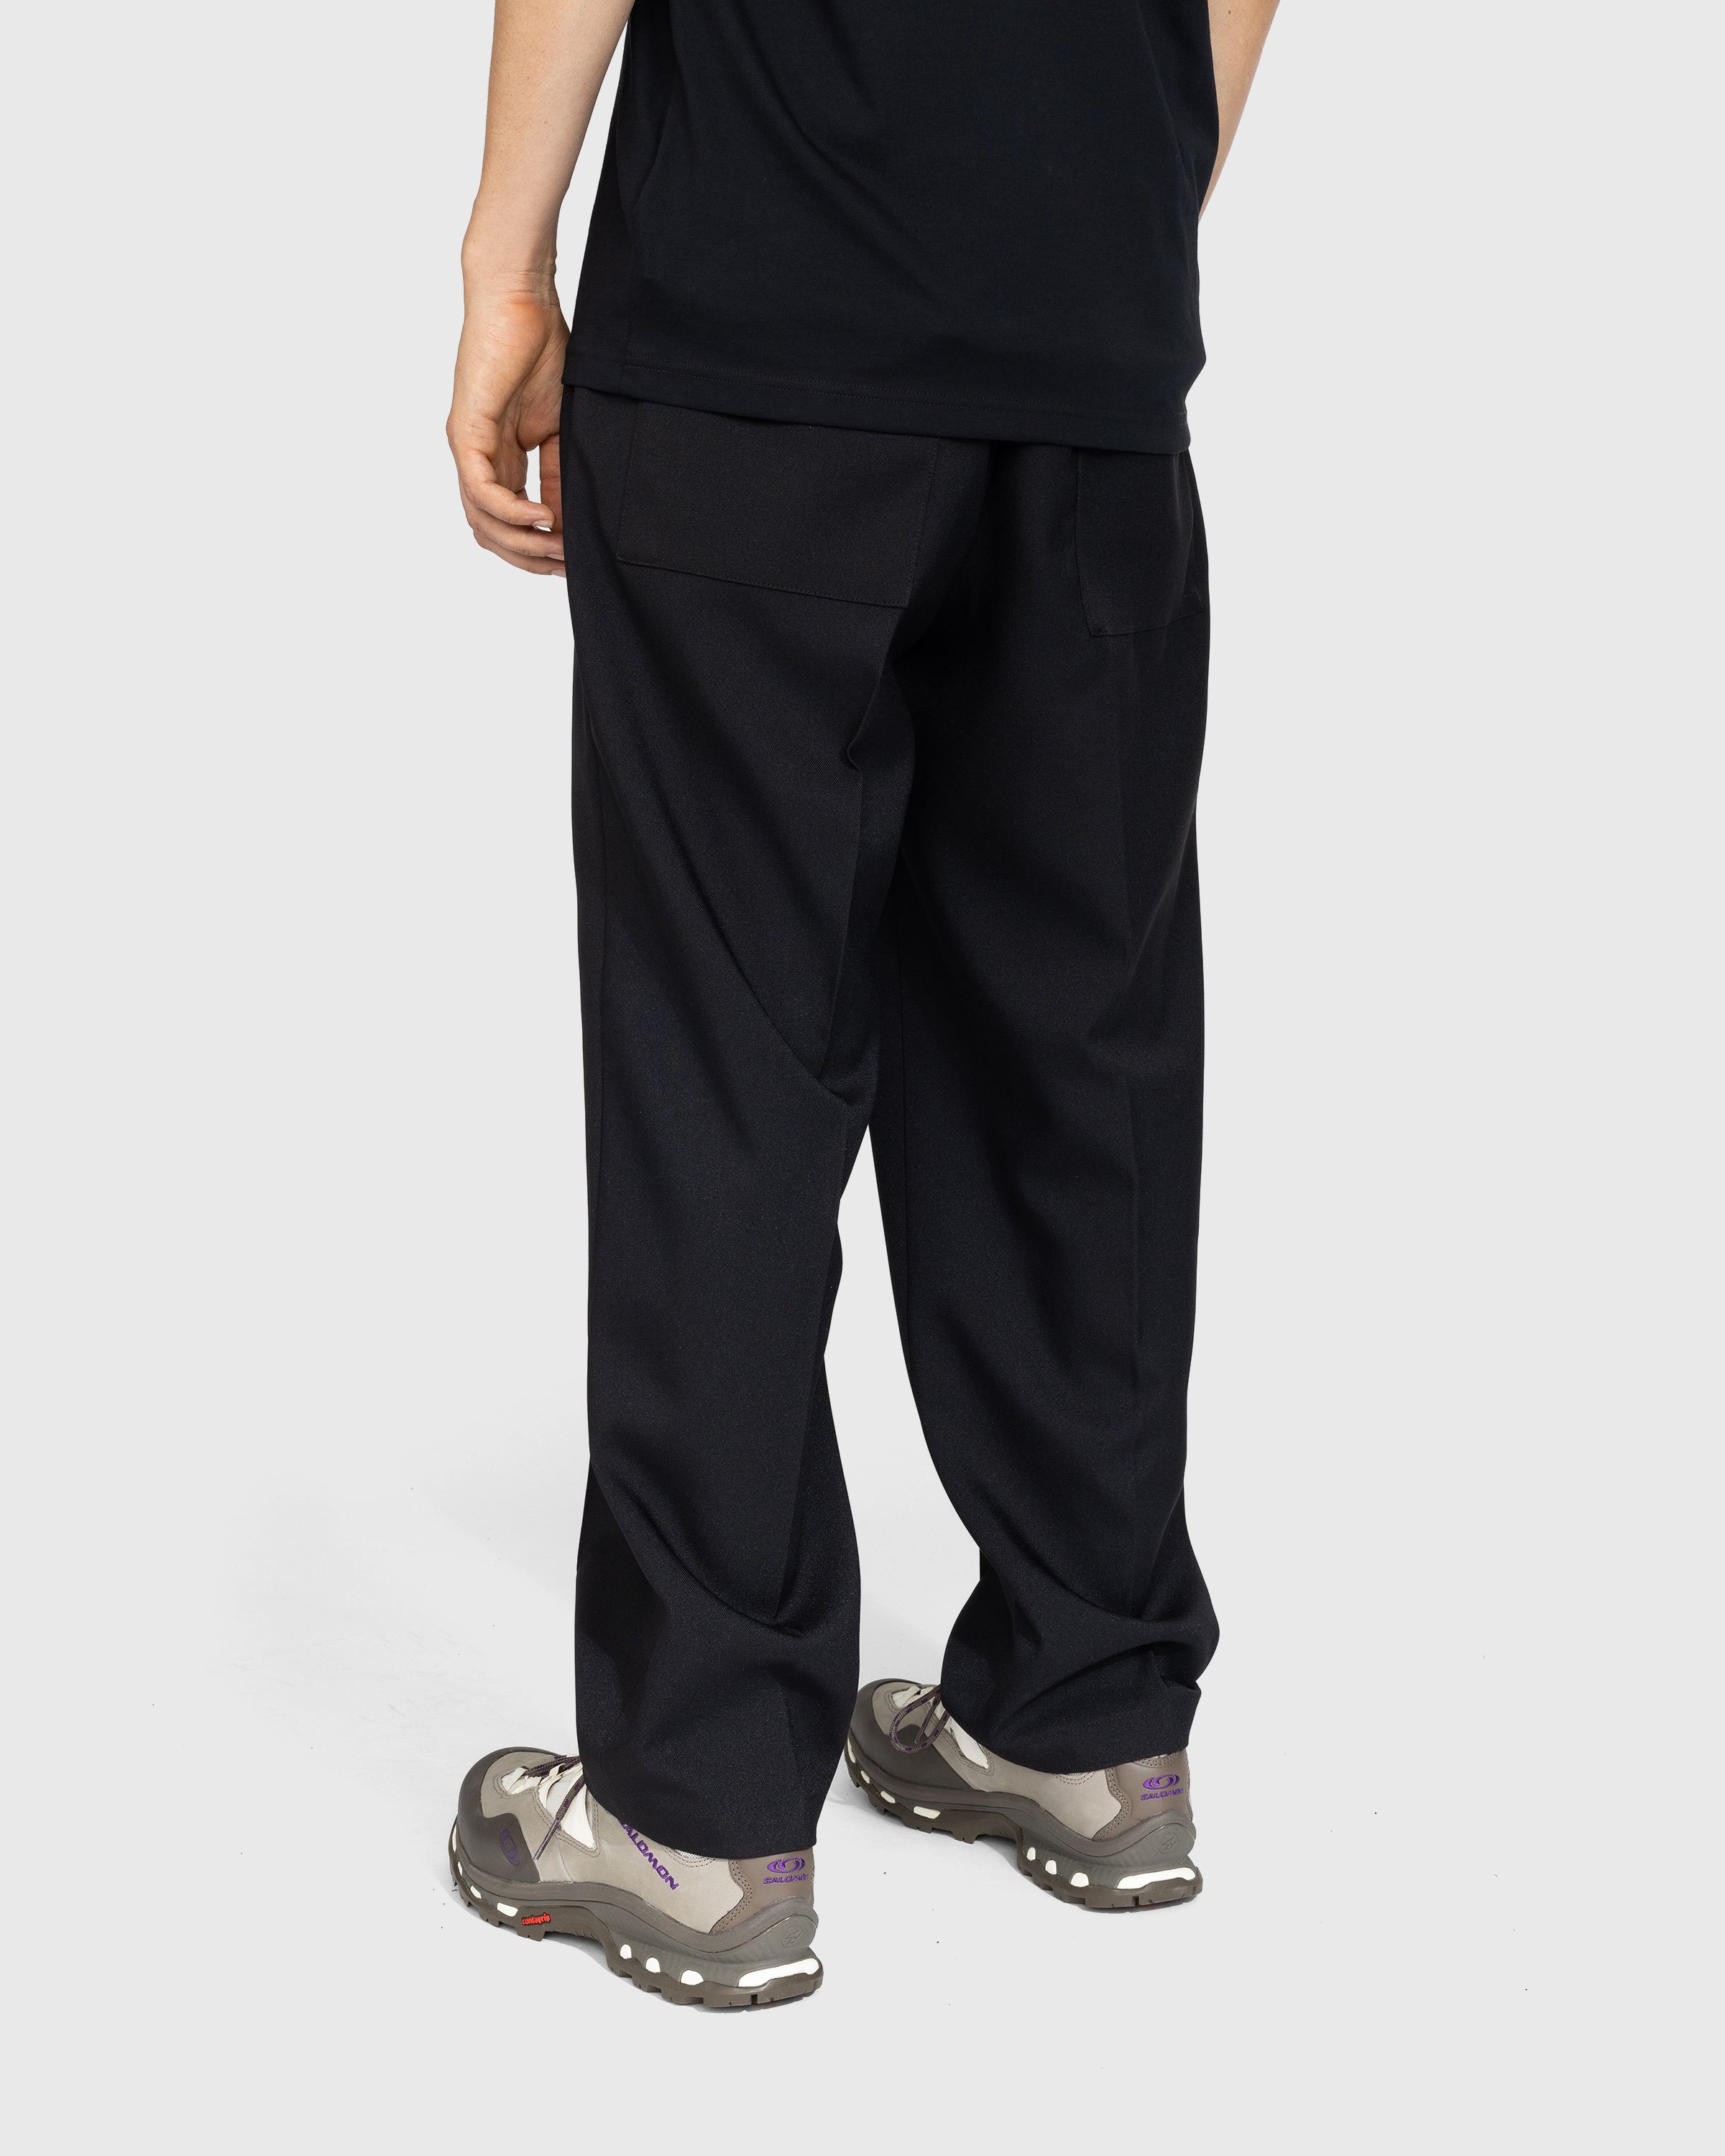 Jil Sander - Trouser D 09 AW 20 - Clothing - Black - Image 2